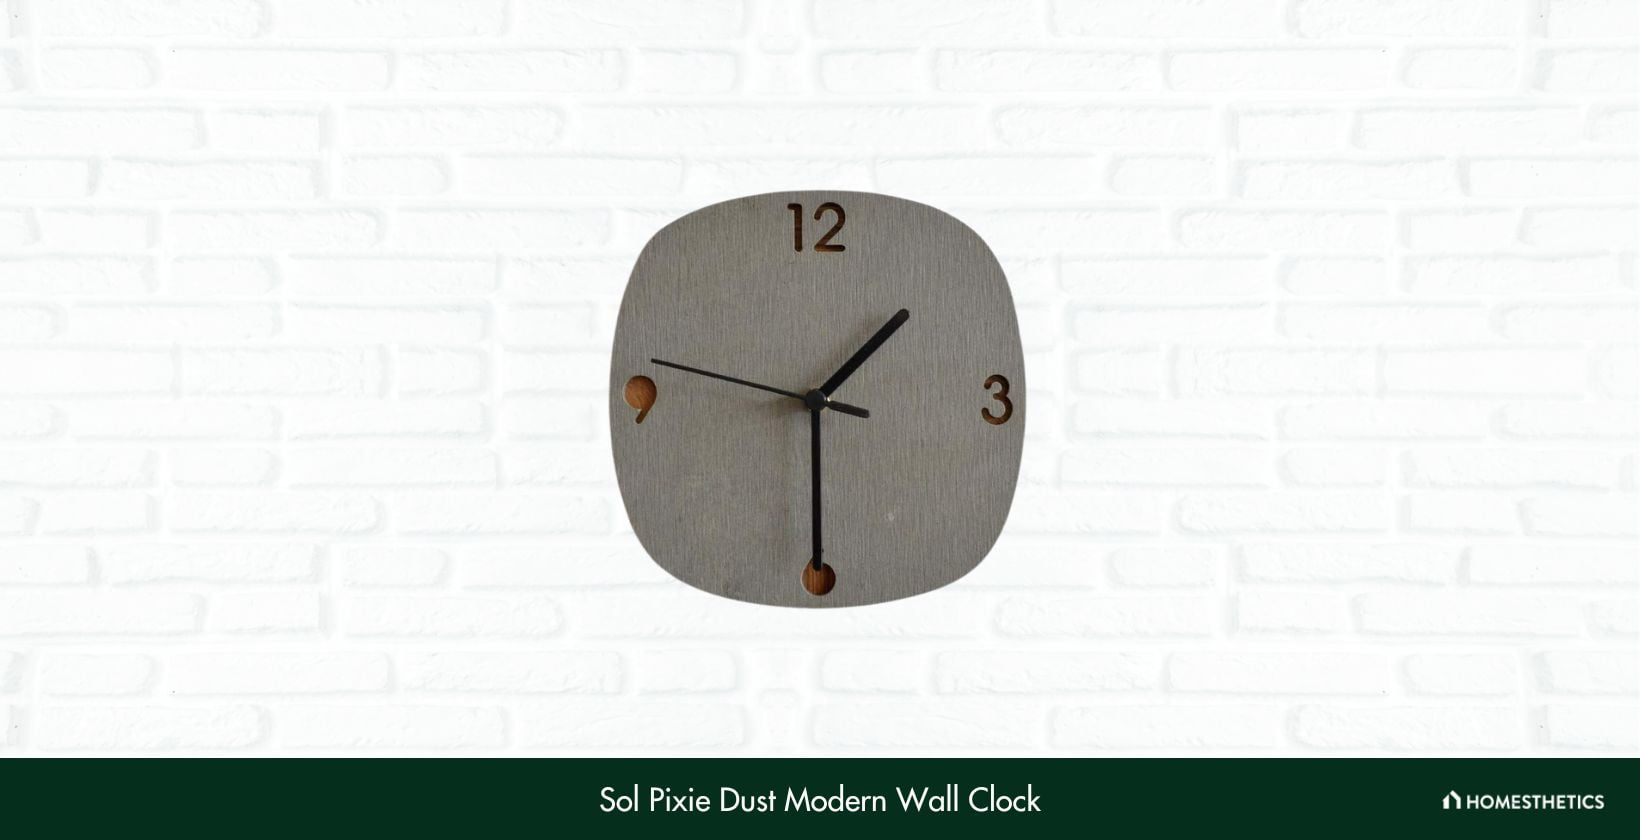 Sol Pixie Dust Modern Wall Clock